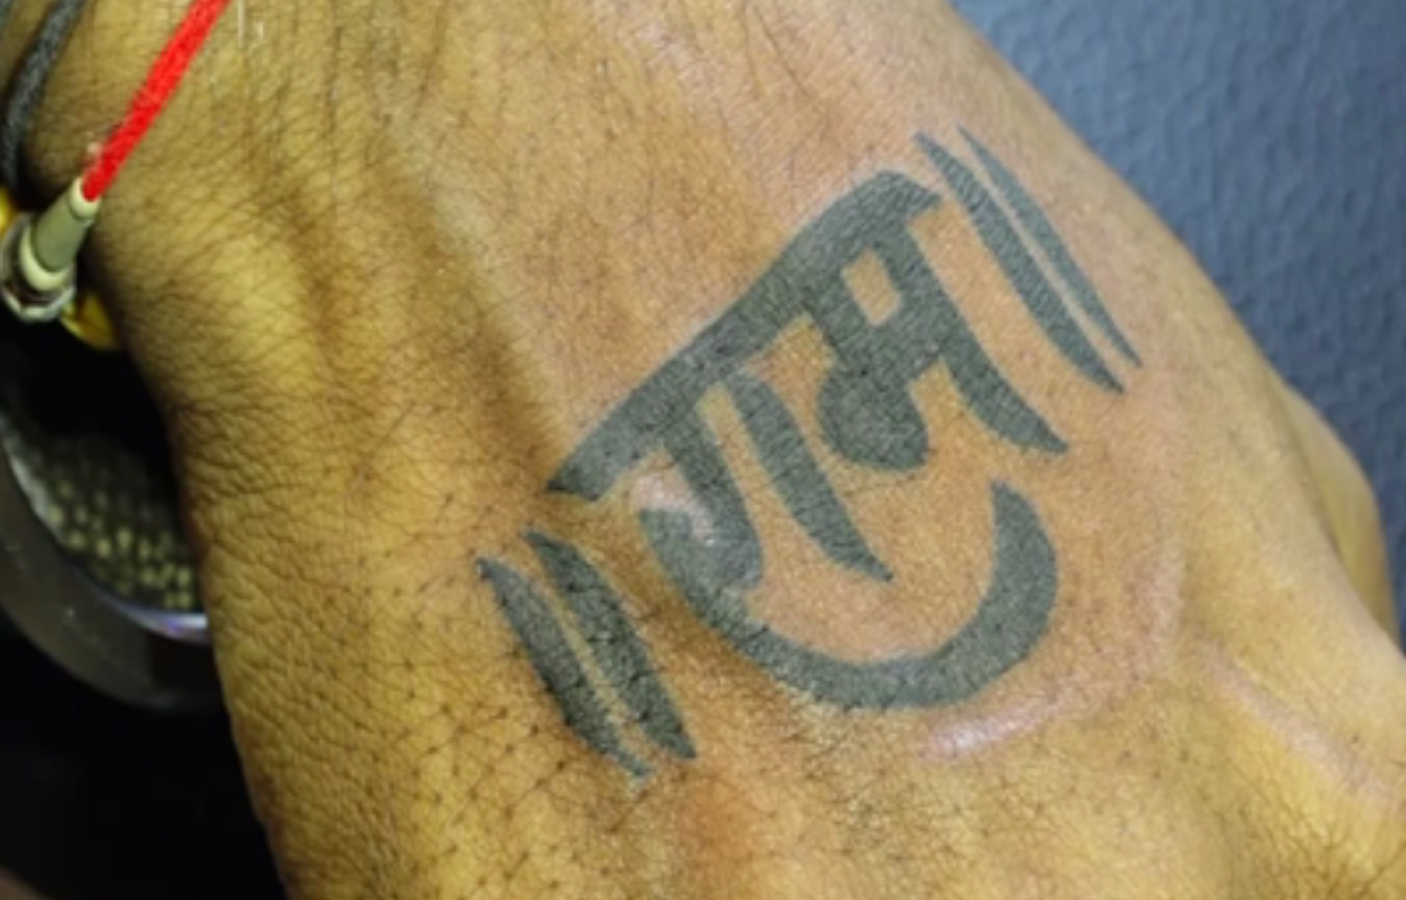 Ram Tattoo On Hand